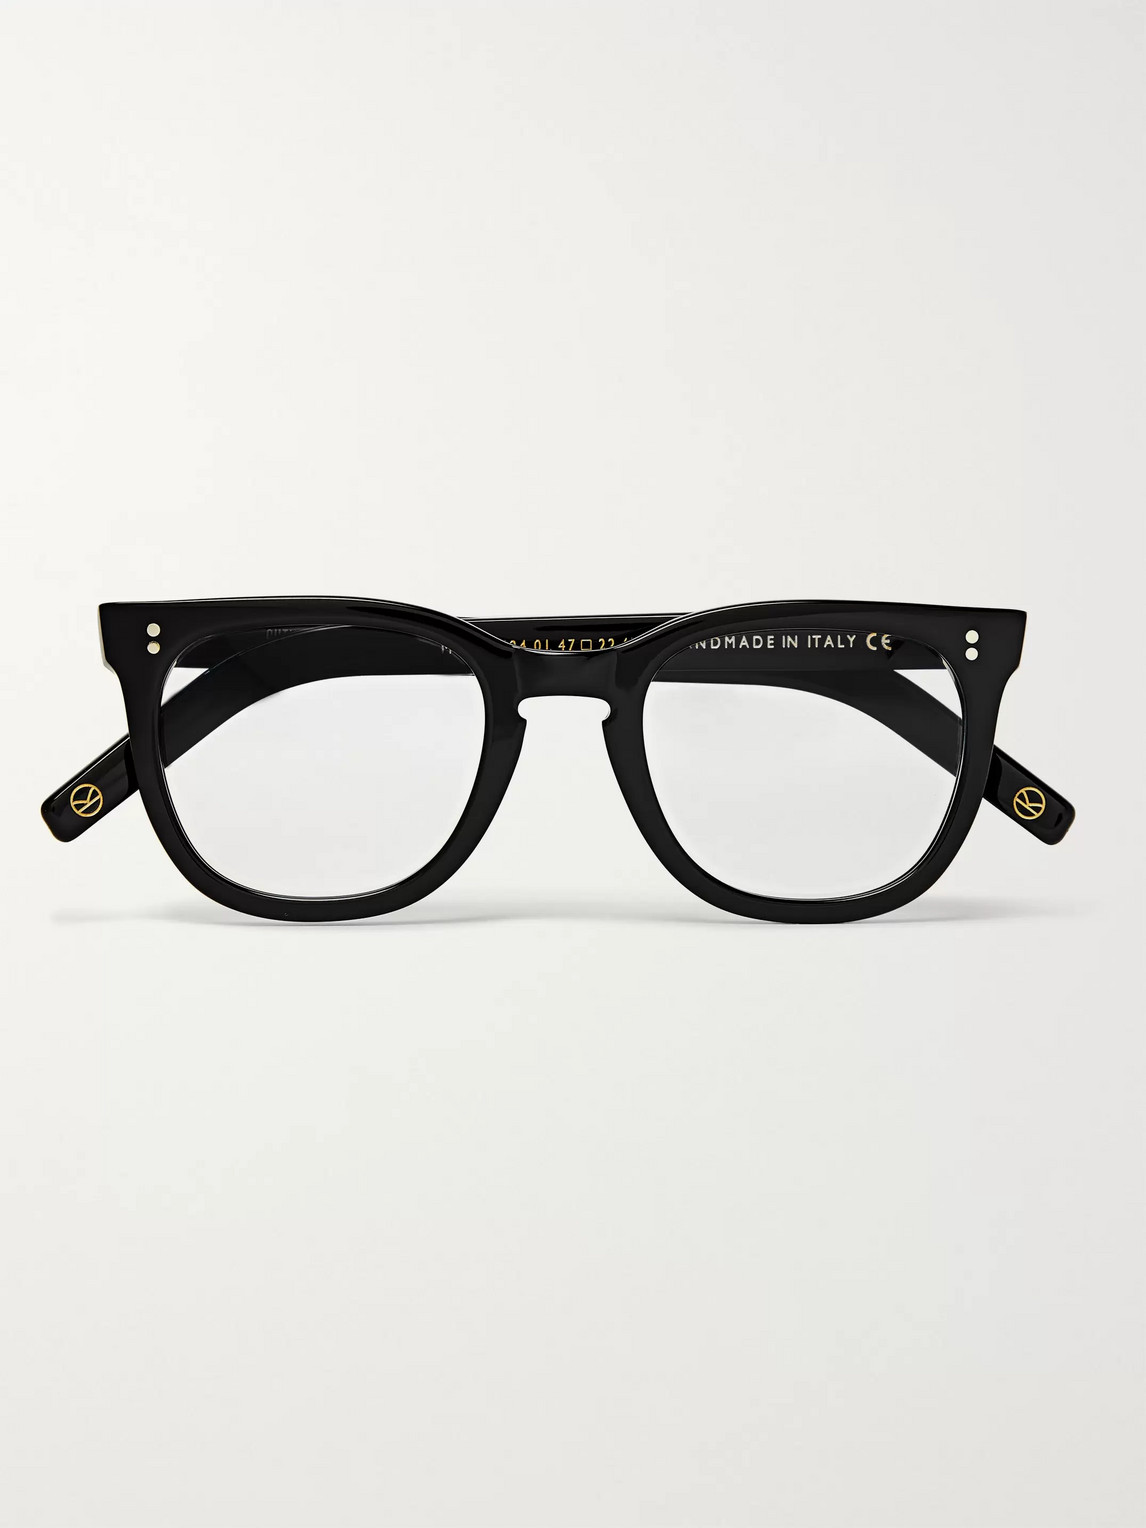 Kingsman Cutler And Gross D-frame Acetate Optical Glasses In Black